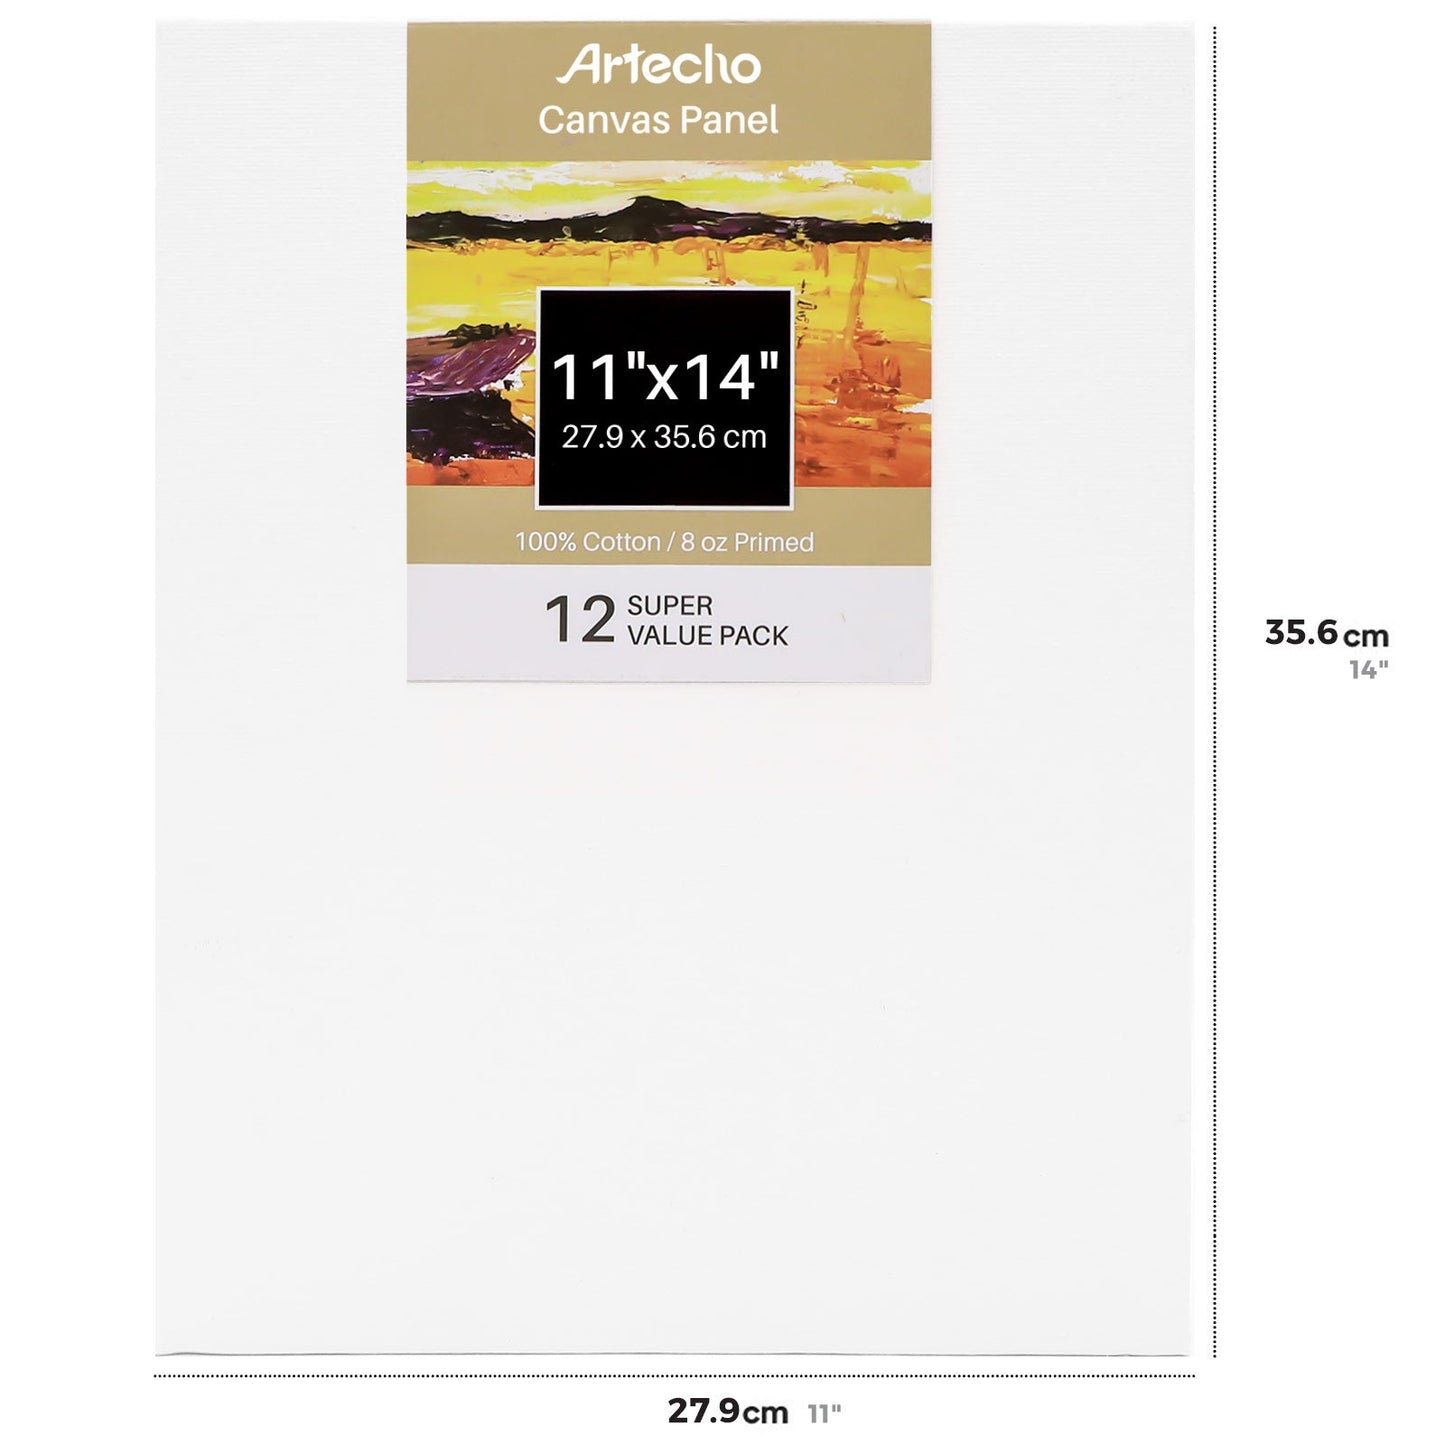 Artecho Canvas Panel 12 Set Value Pack White - 11" x 14" - Lifespace